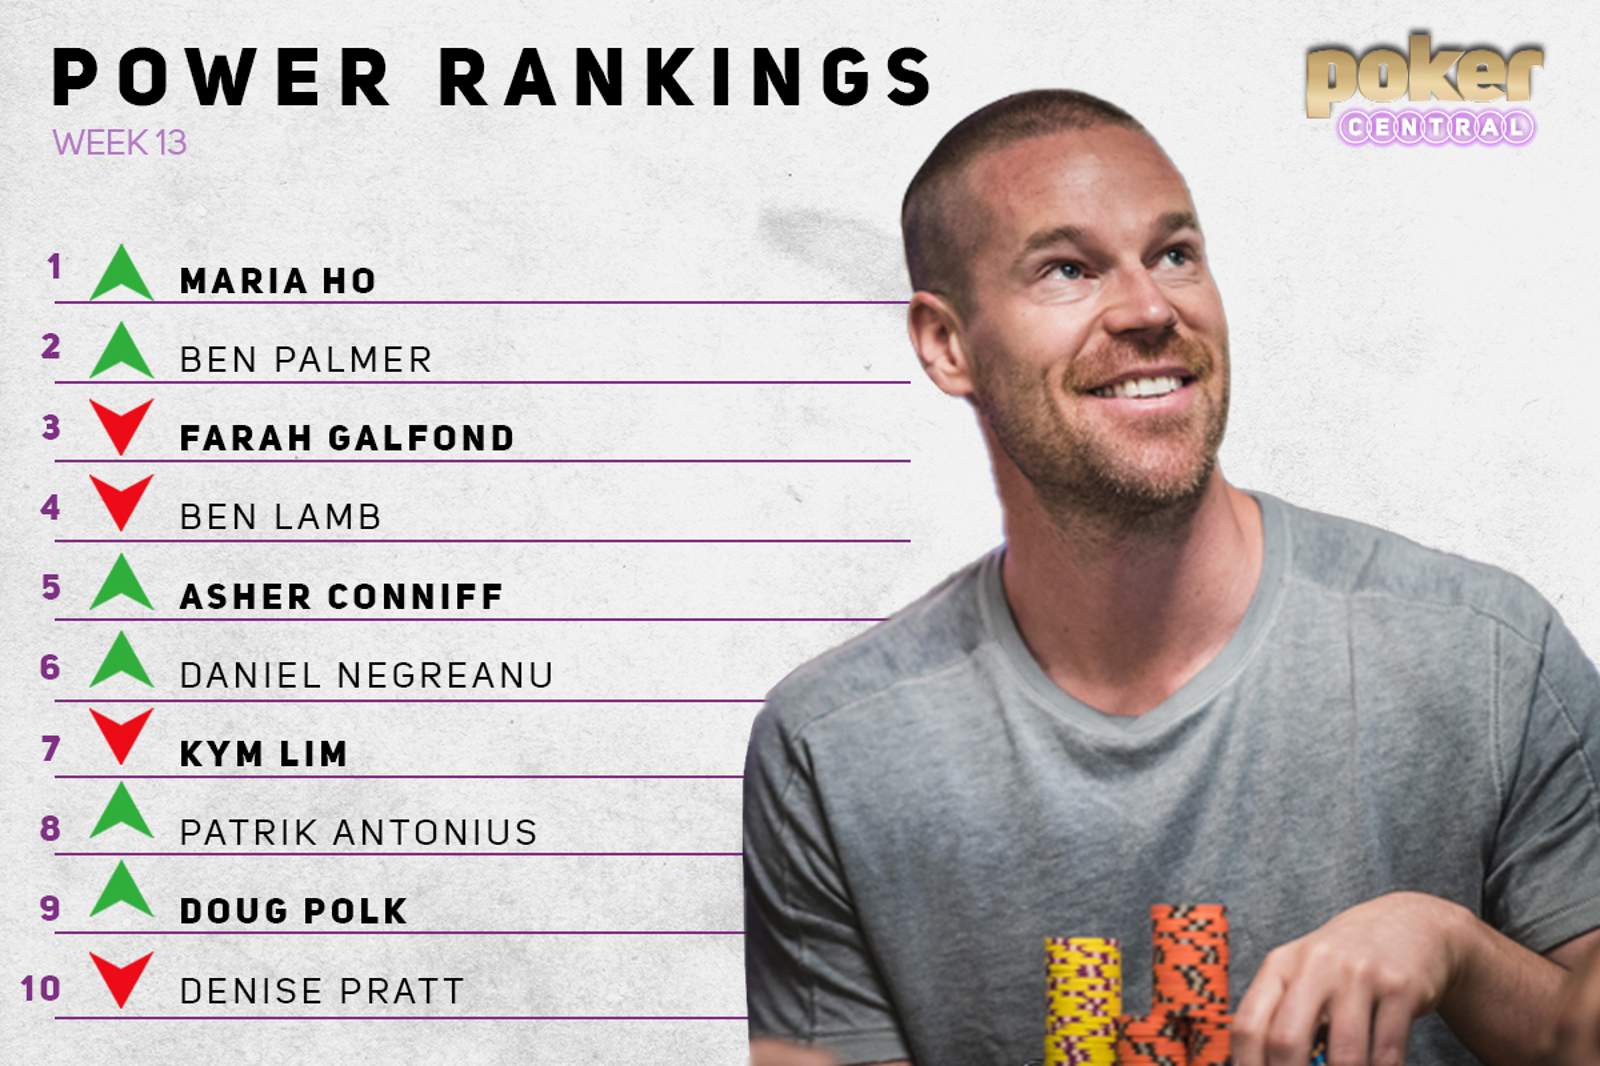 Poker Central Power Rankings - Ho Up Top, Antonius and Polk Enter